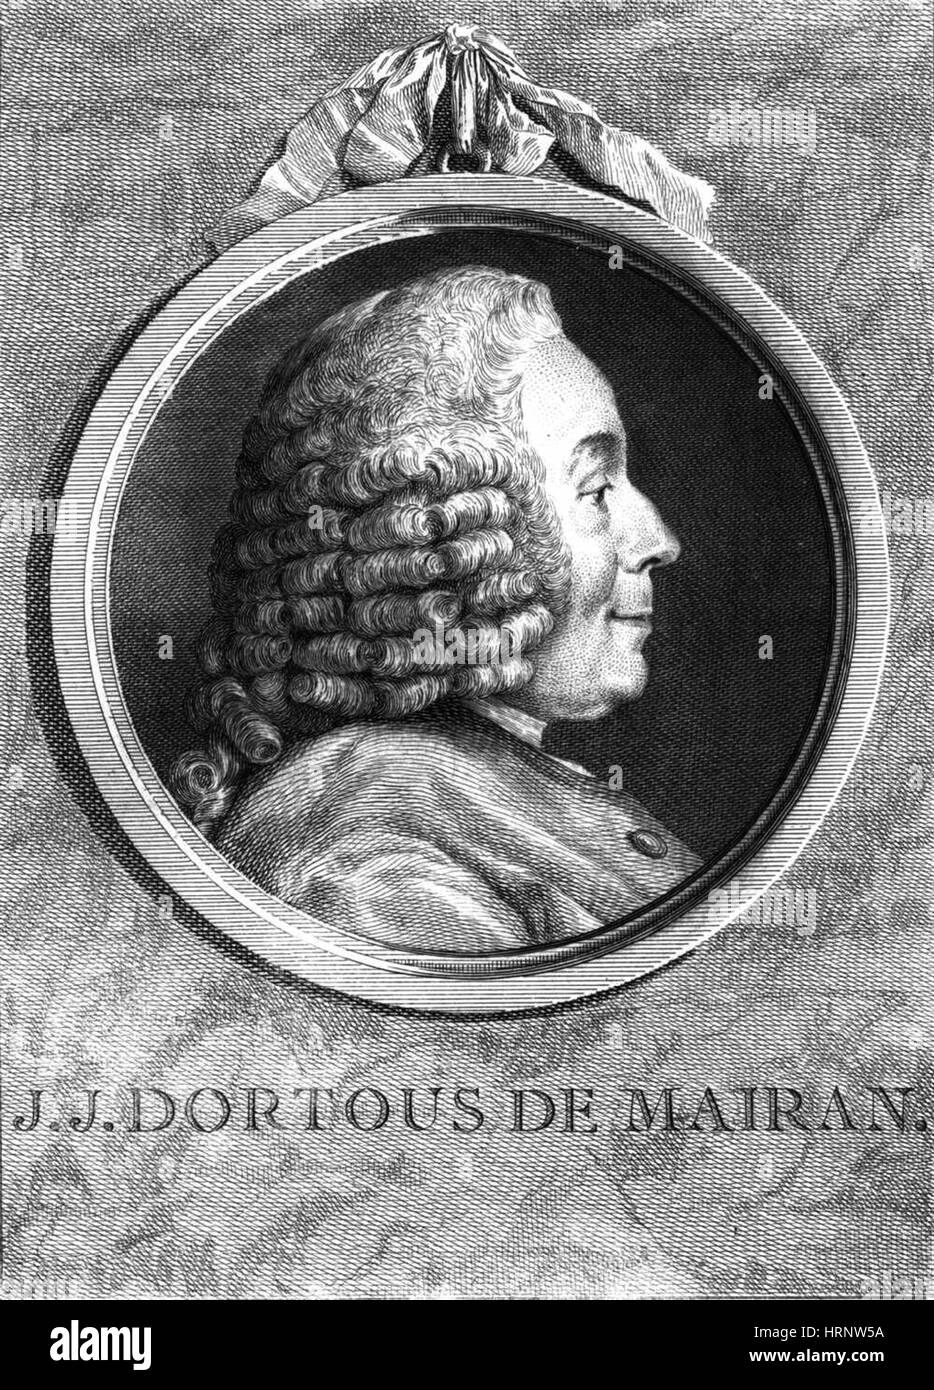 Jean d'Ortous de Mairan, French Biologist Stock Photo